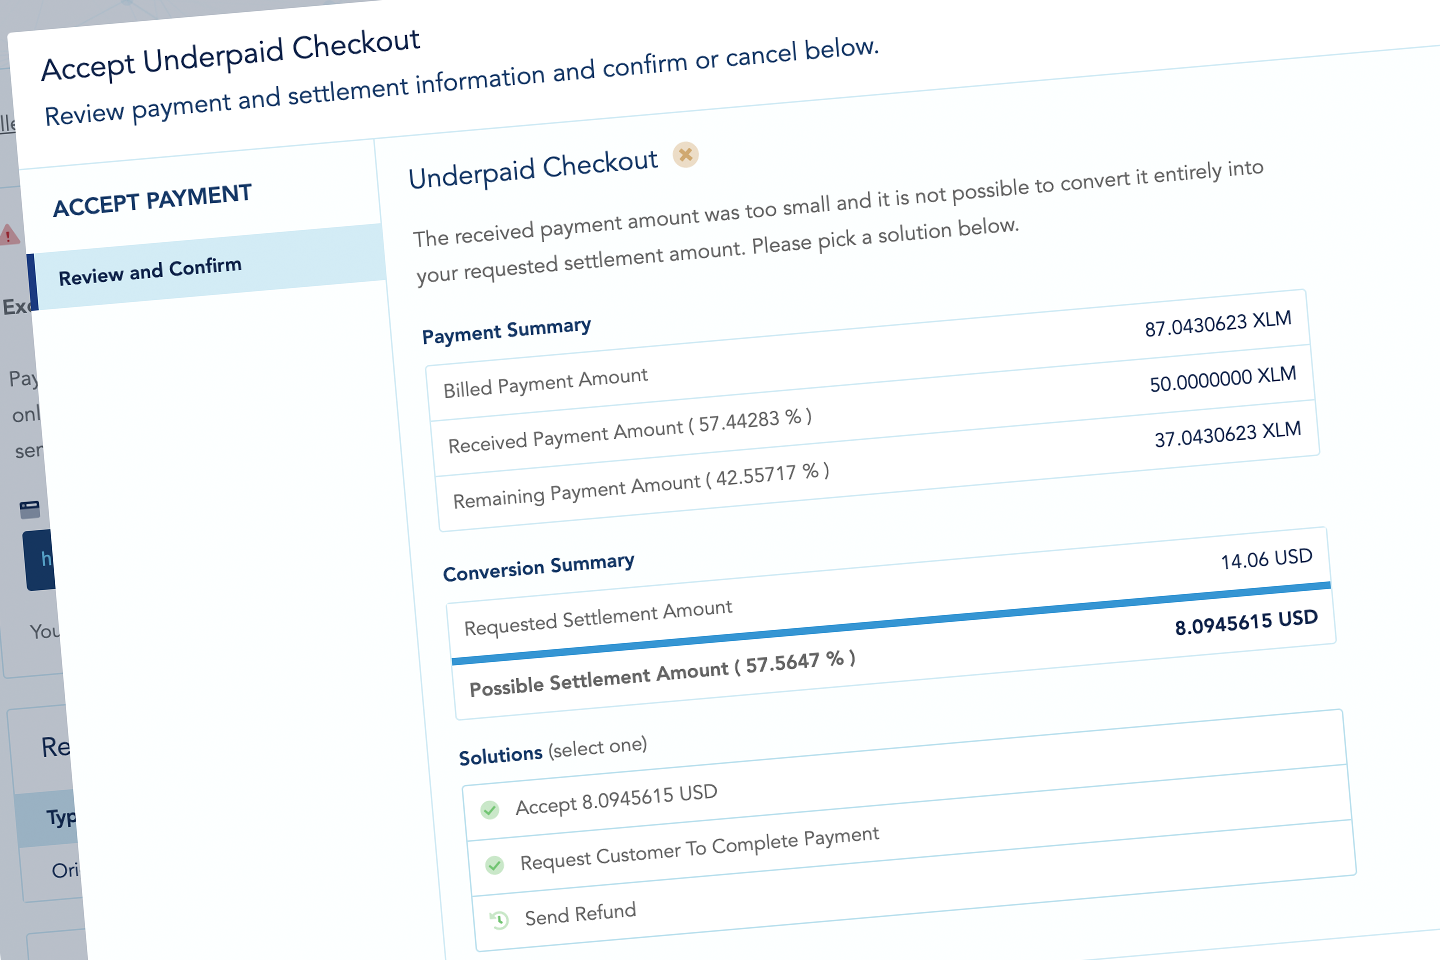 Accept Underpaid Checkout